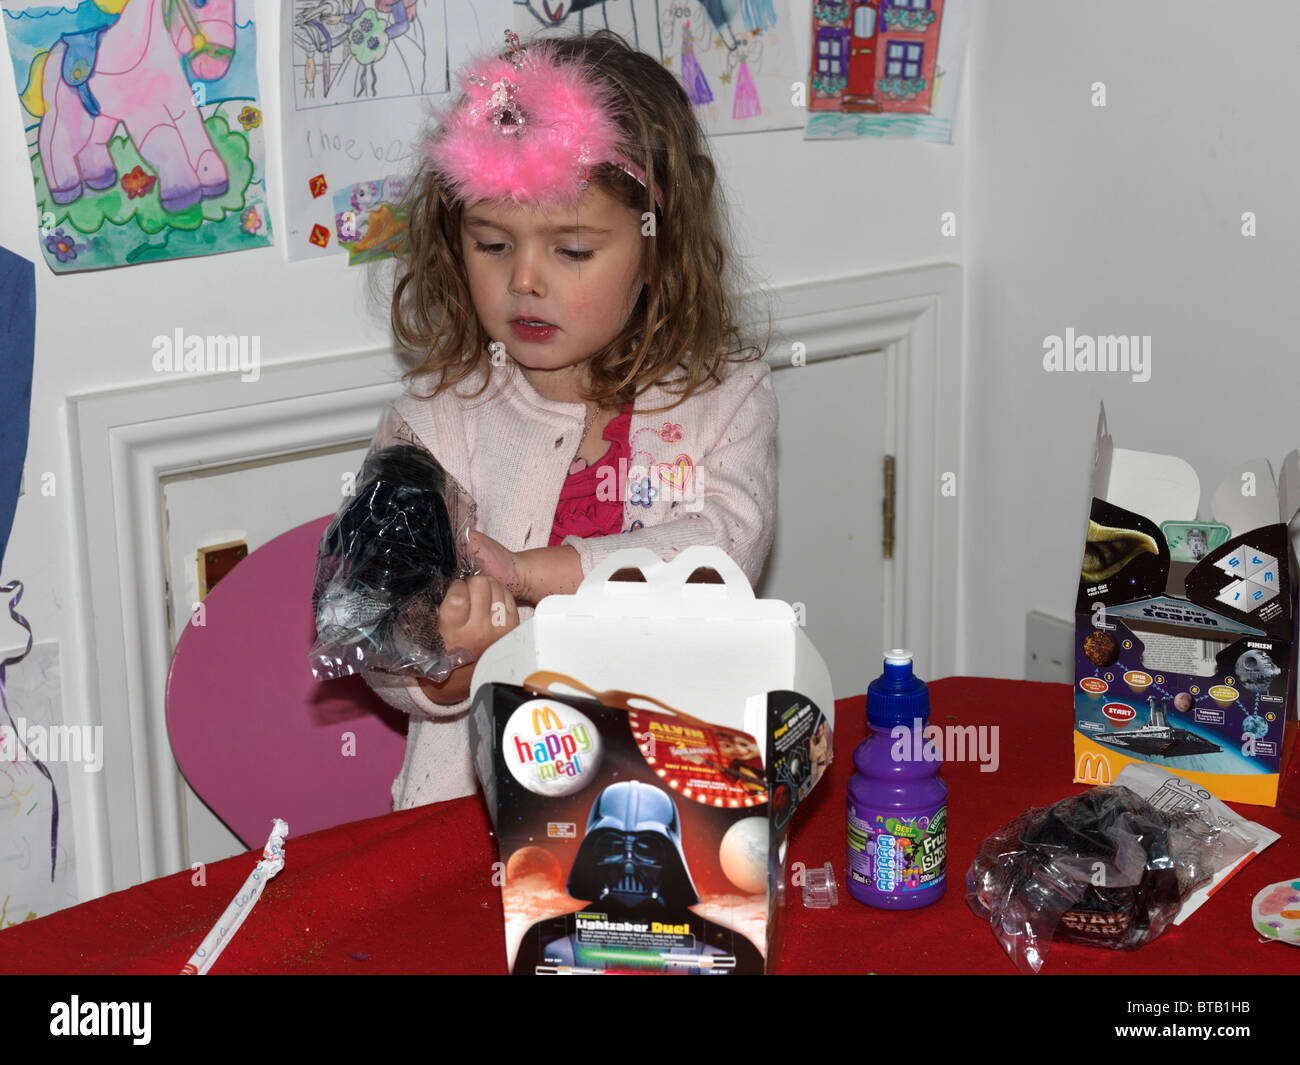 Young Girl mit A McDonalds Happy Meal spielen mit A Star Wars Spielzeug  England Stockfotografie - Alamy